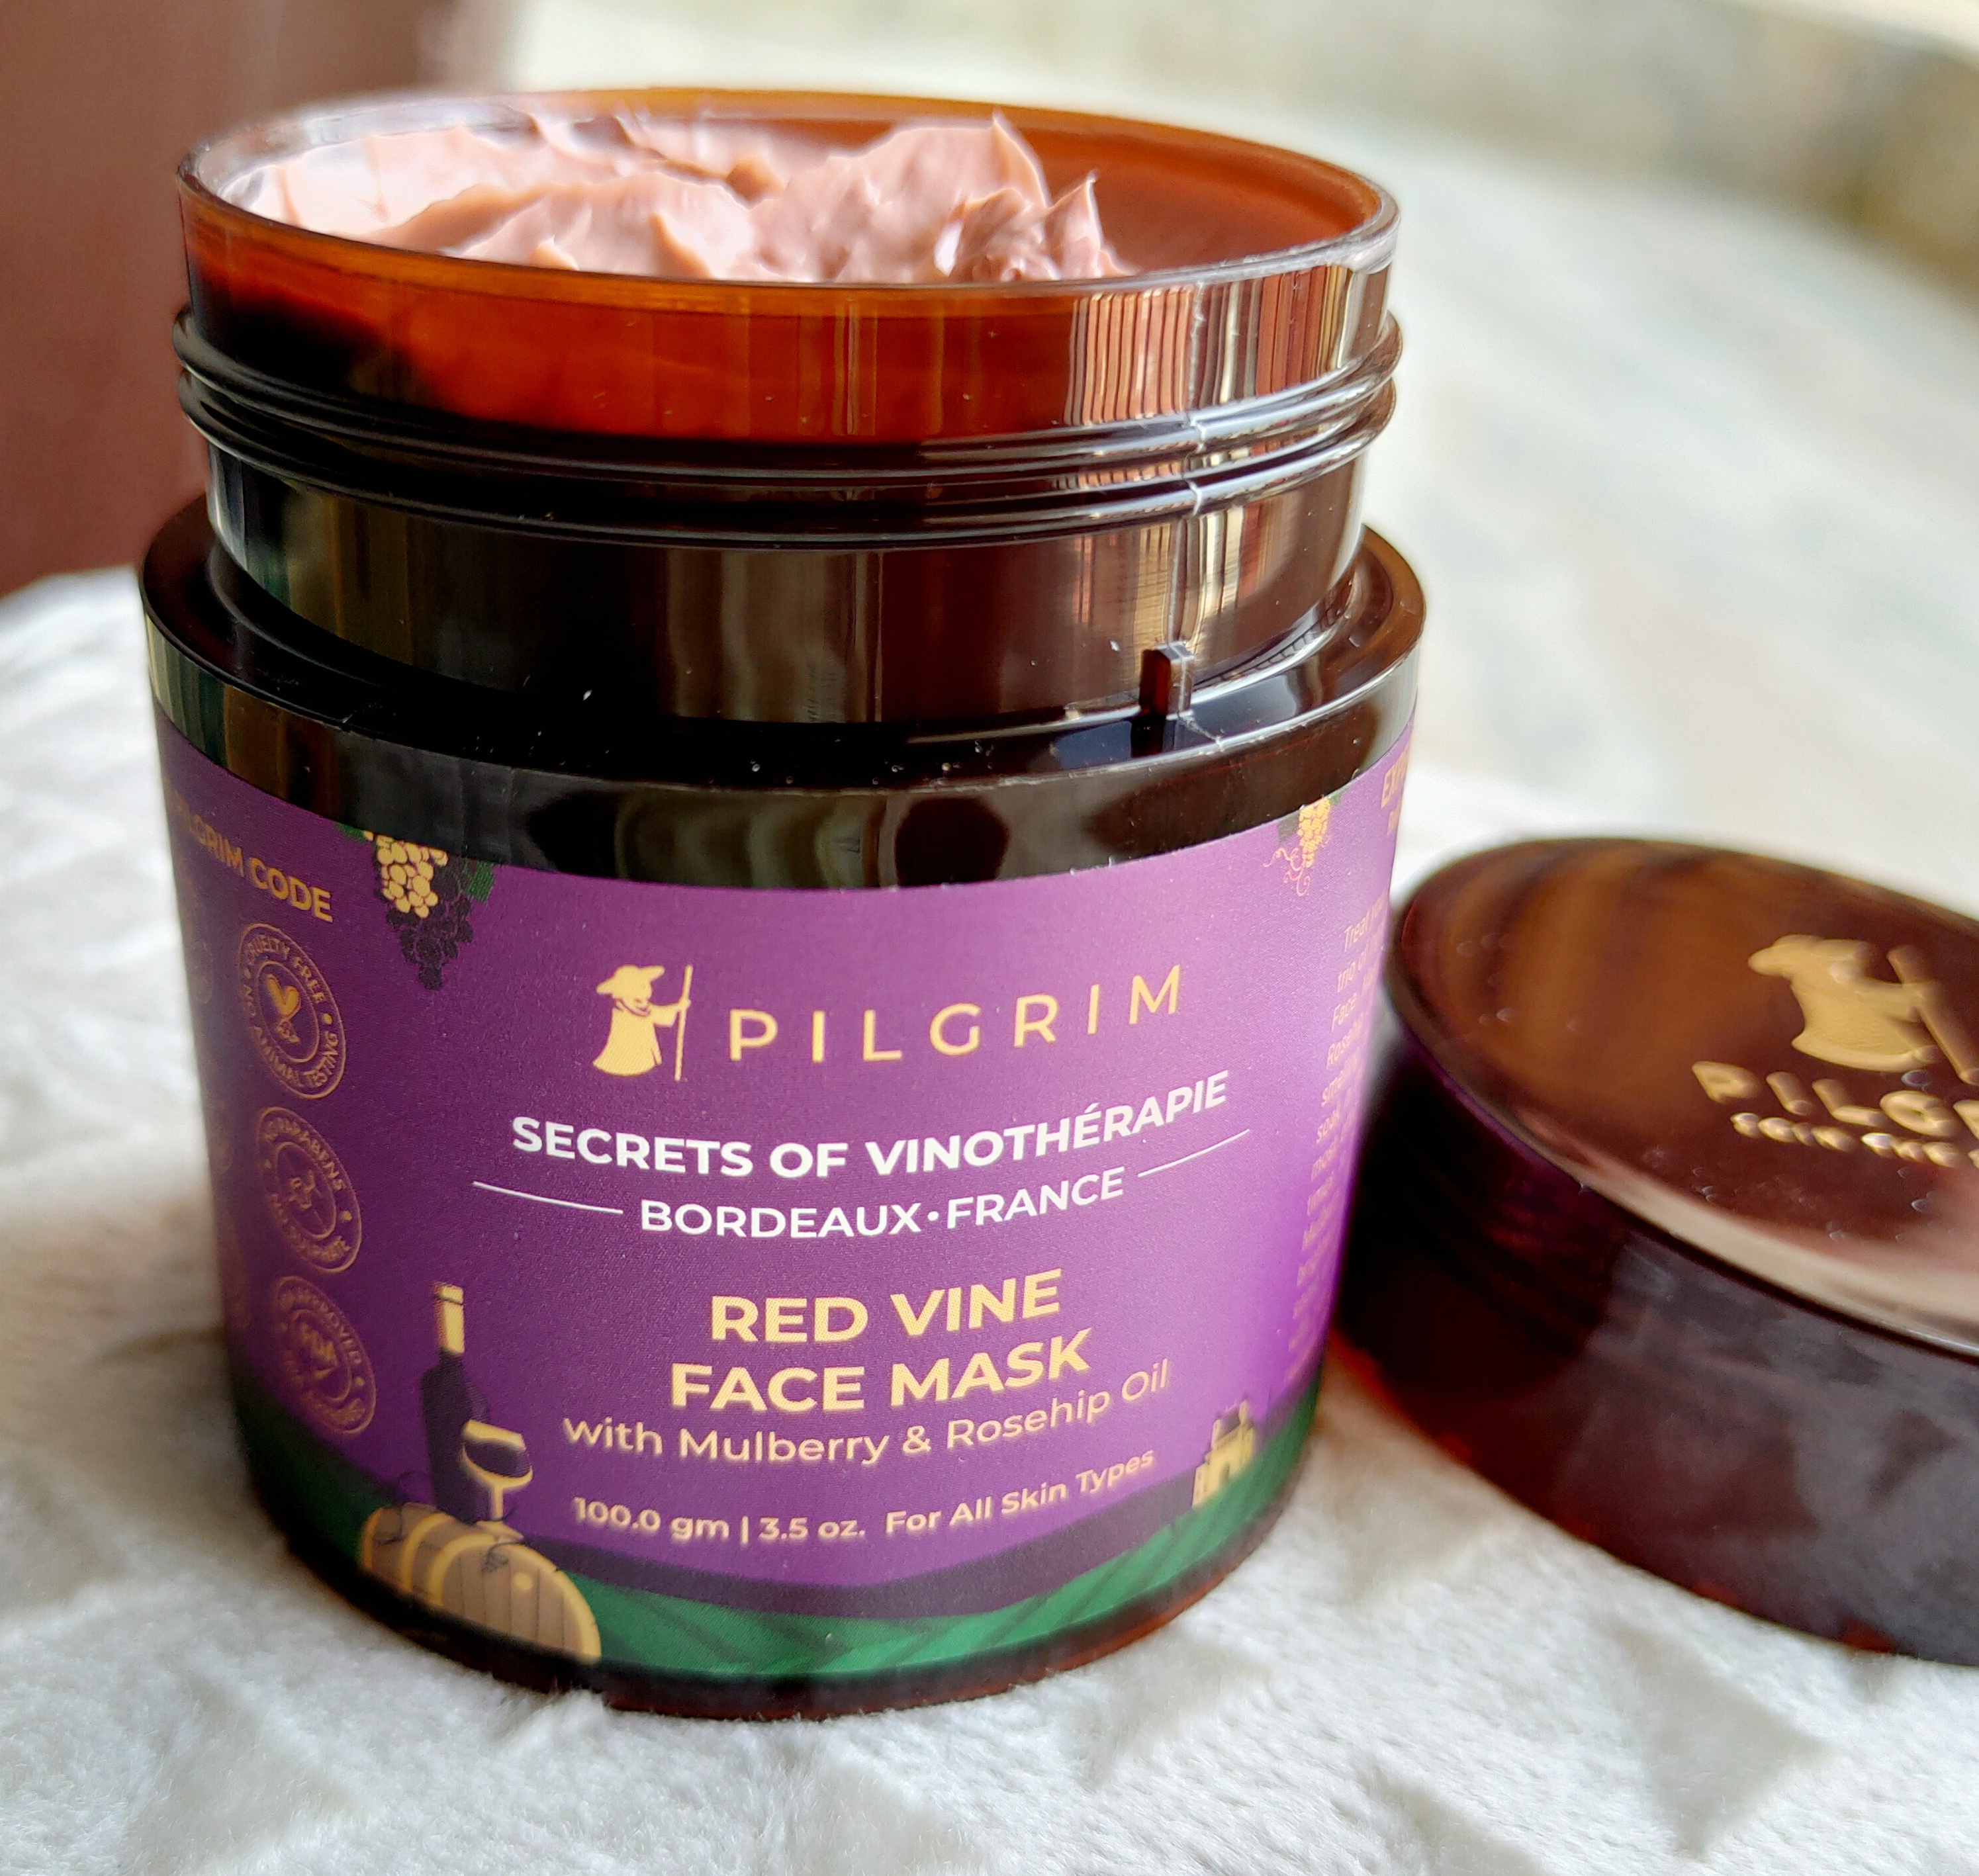 Pilgrim Secrets of Vinotherapie Red Vine Face Mask Review